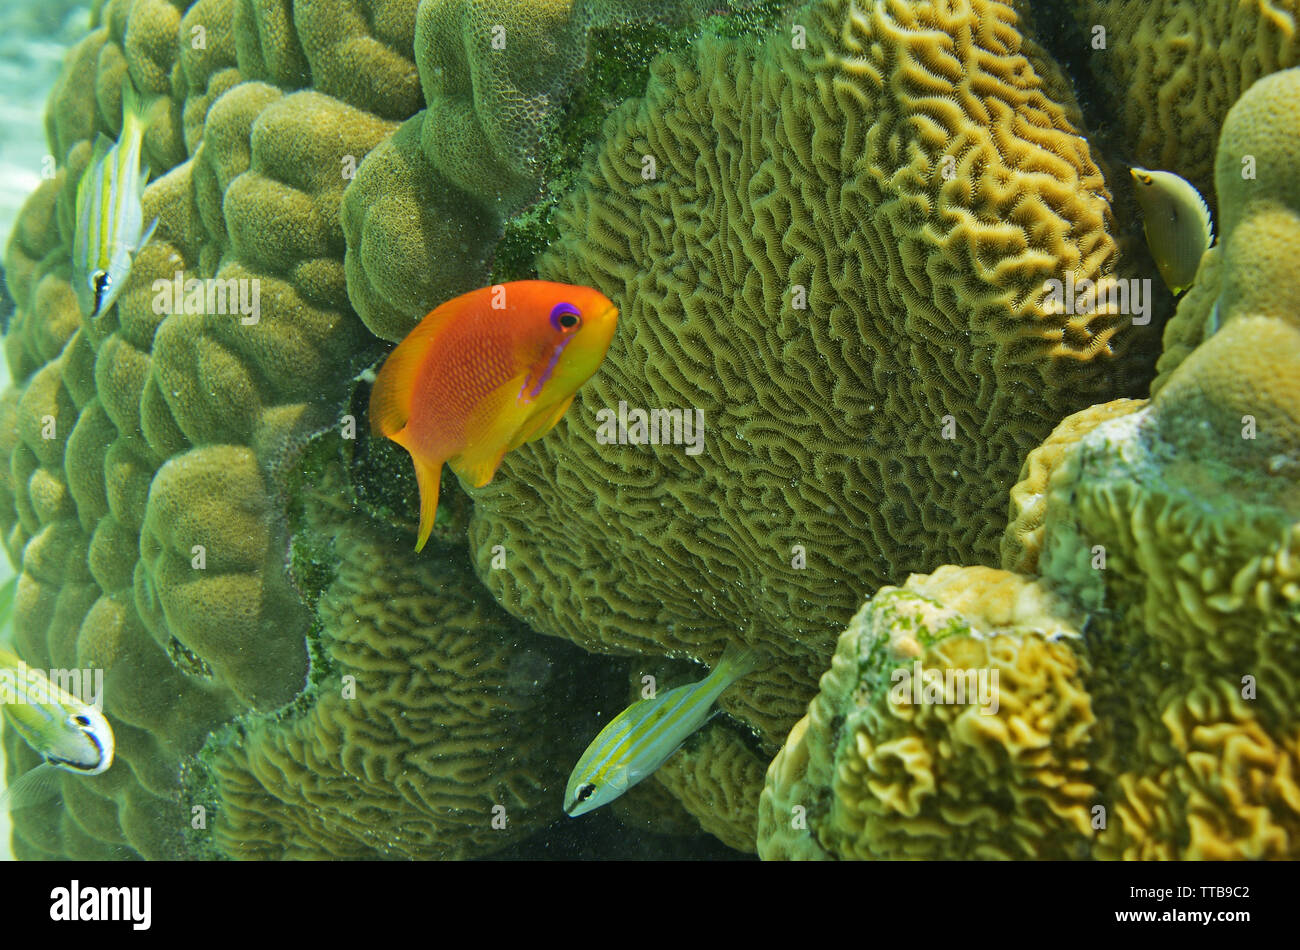 SCUBA diving and Underwater marine life, Lakshadweep, India Stock Photo